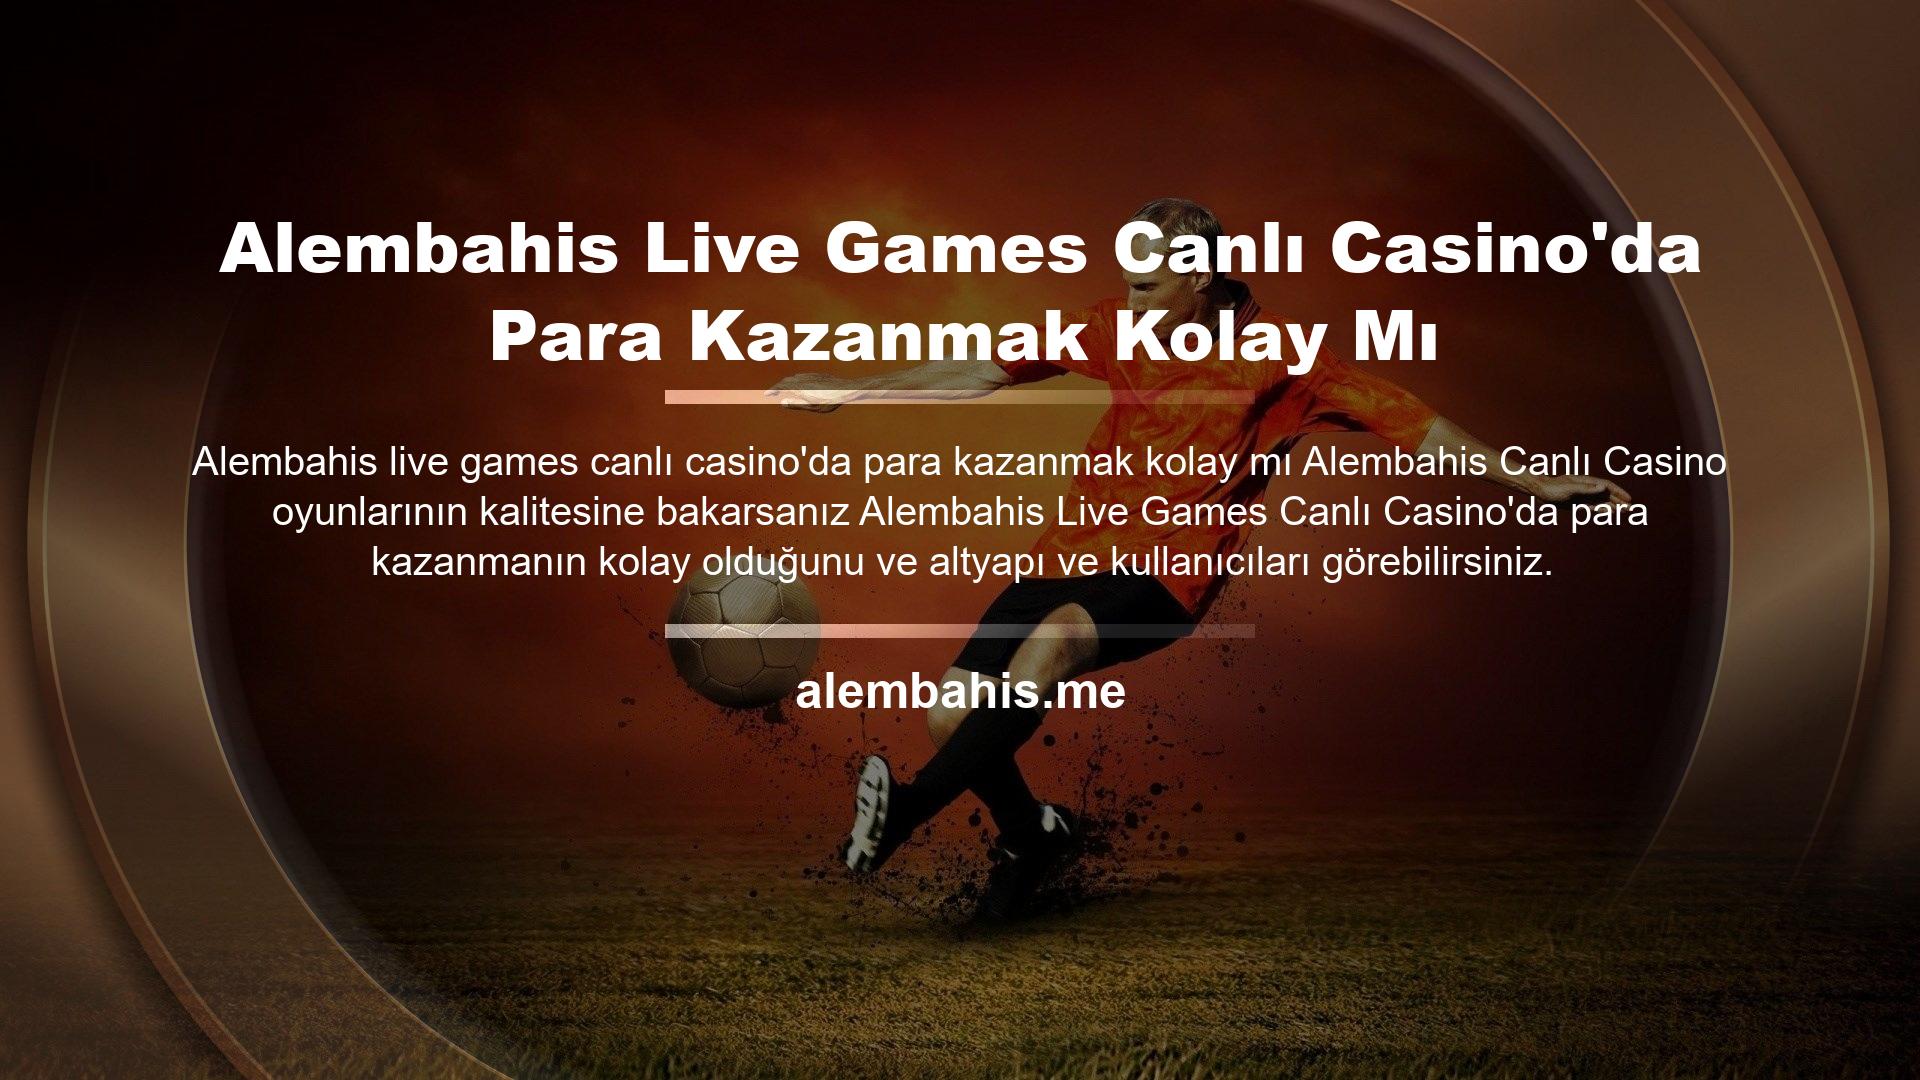 Alembahis Live Games Canlı Casino'da Para Kazanmak Kolay Mı